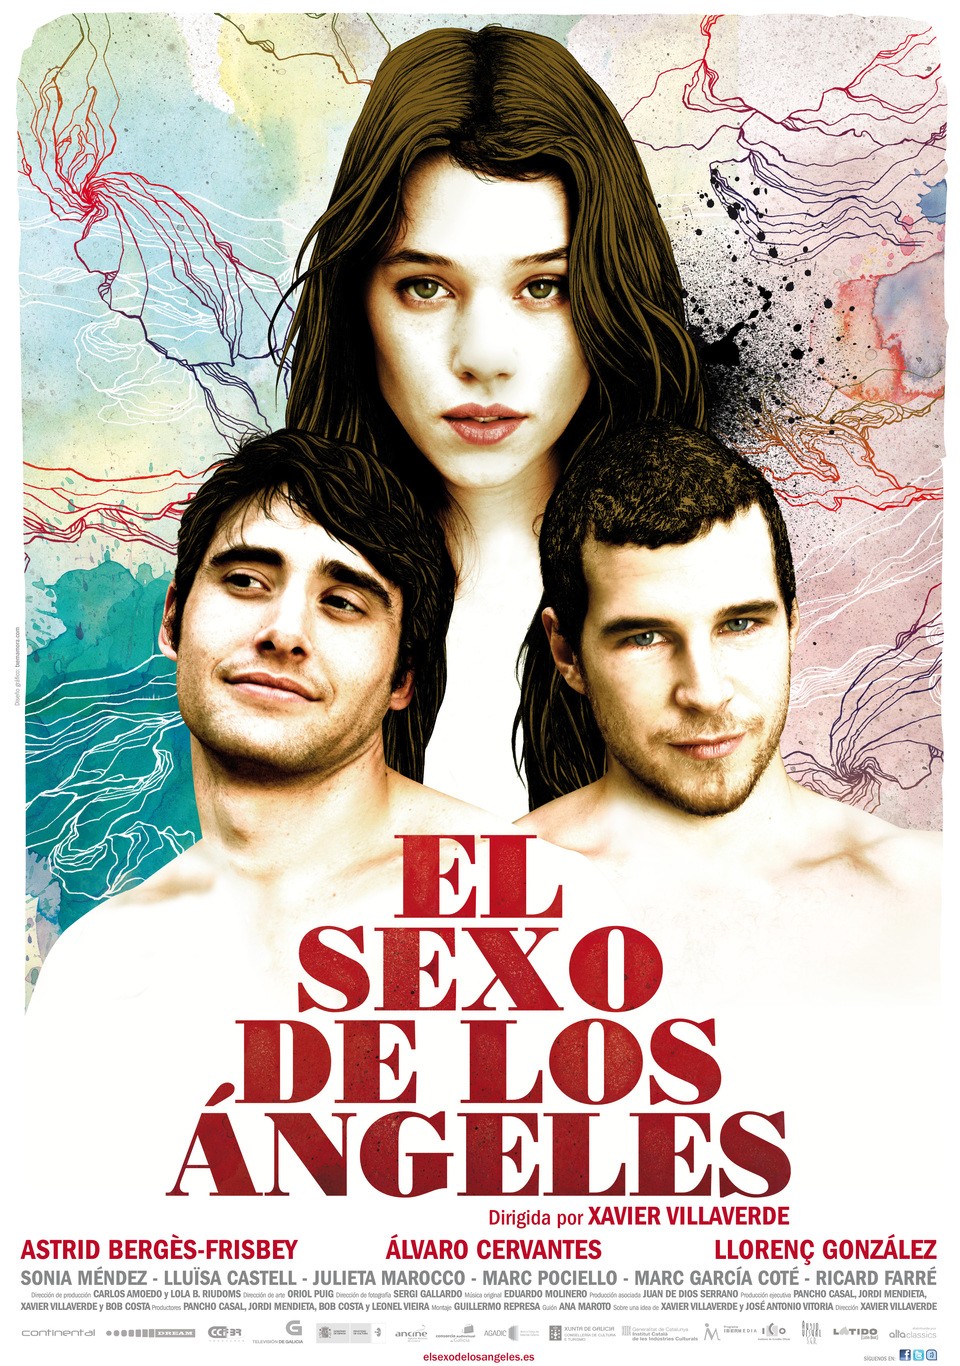 Extra Large Movie Poster Image for El sexo de los ángeles 